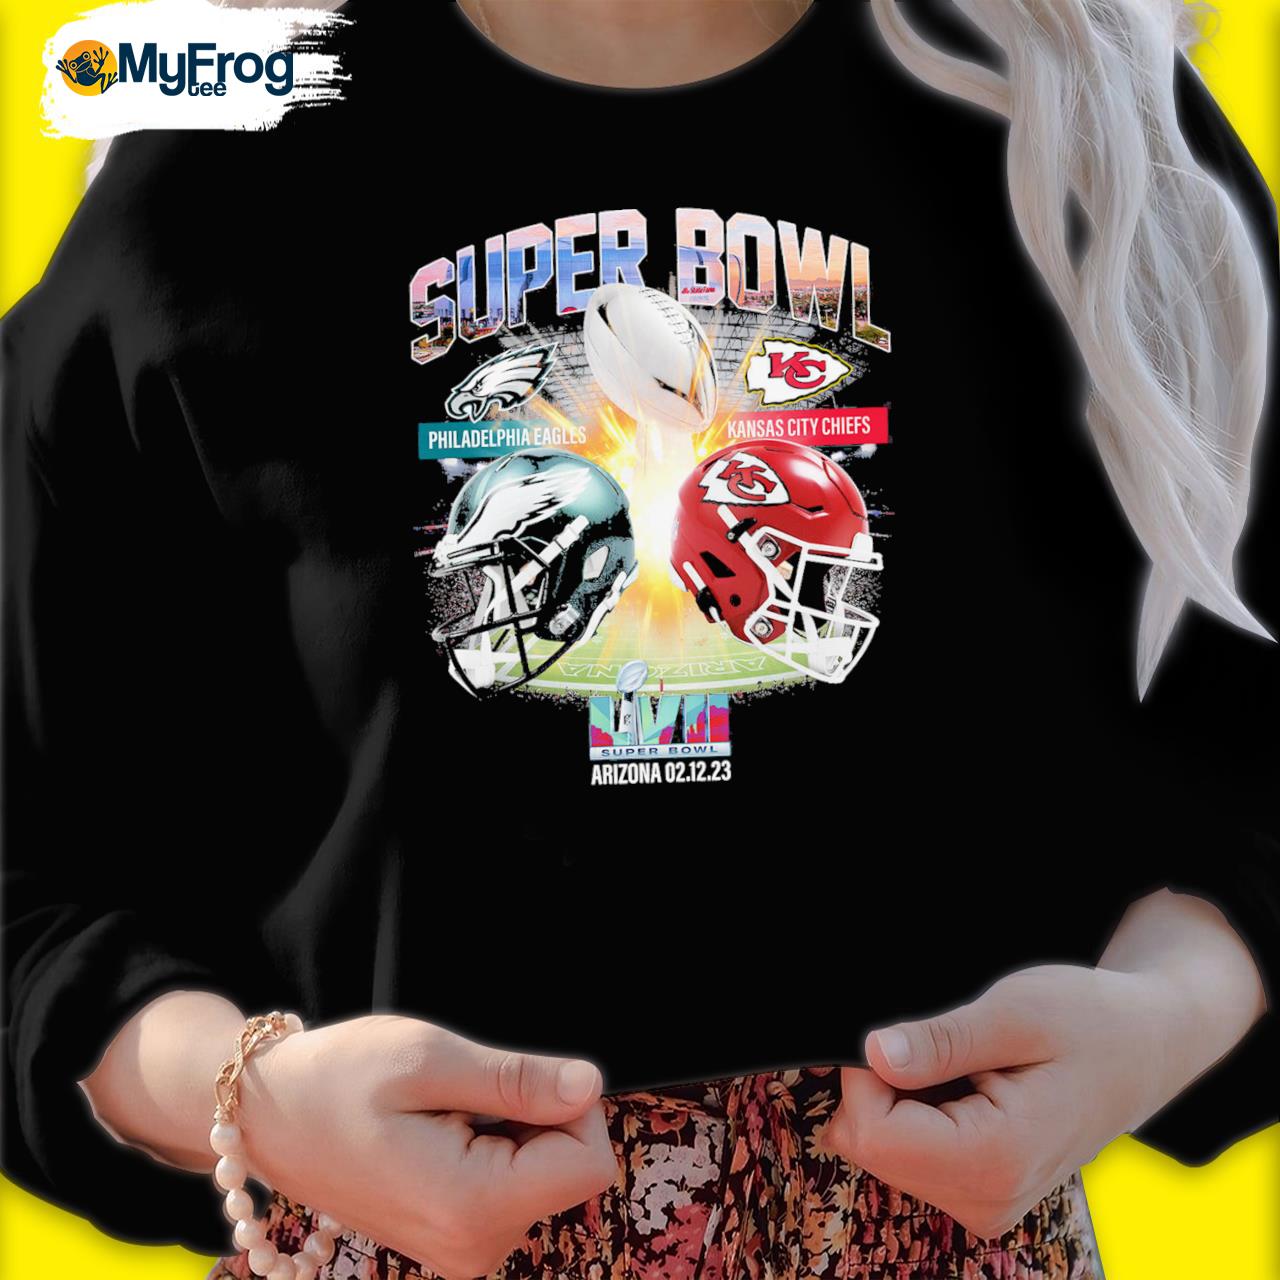 Super Bowl Lvii 2023 Shirt, Philadelphia Eagles Vs Kansas City